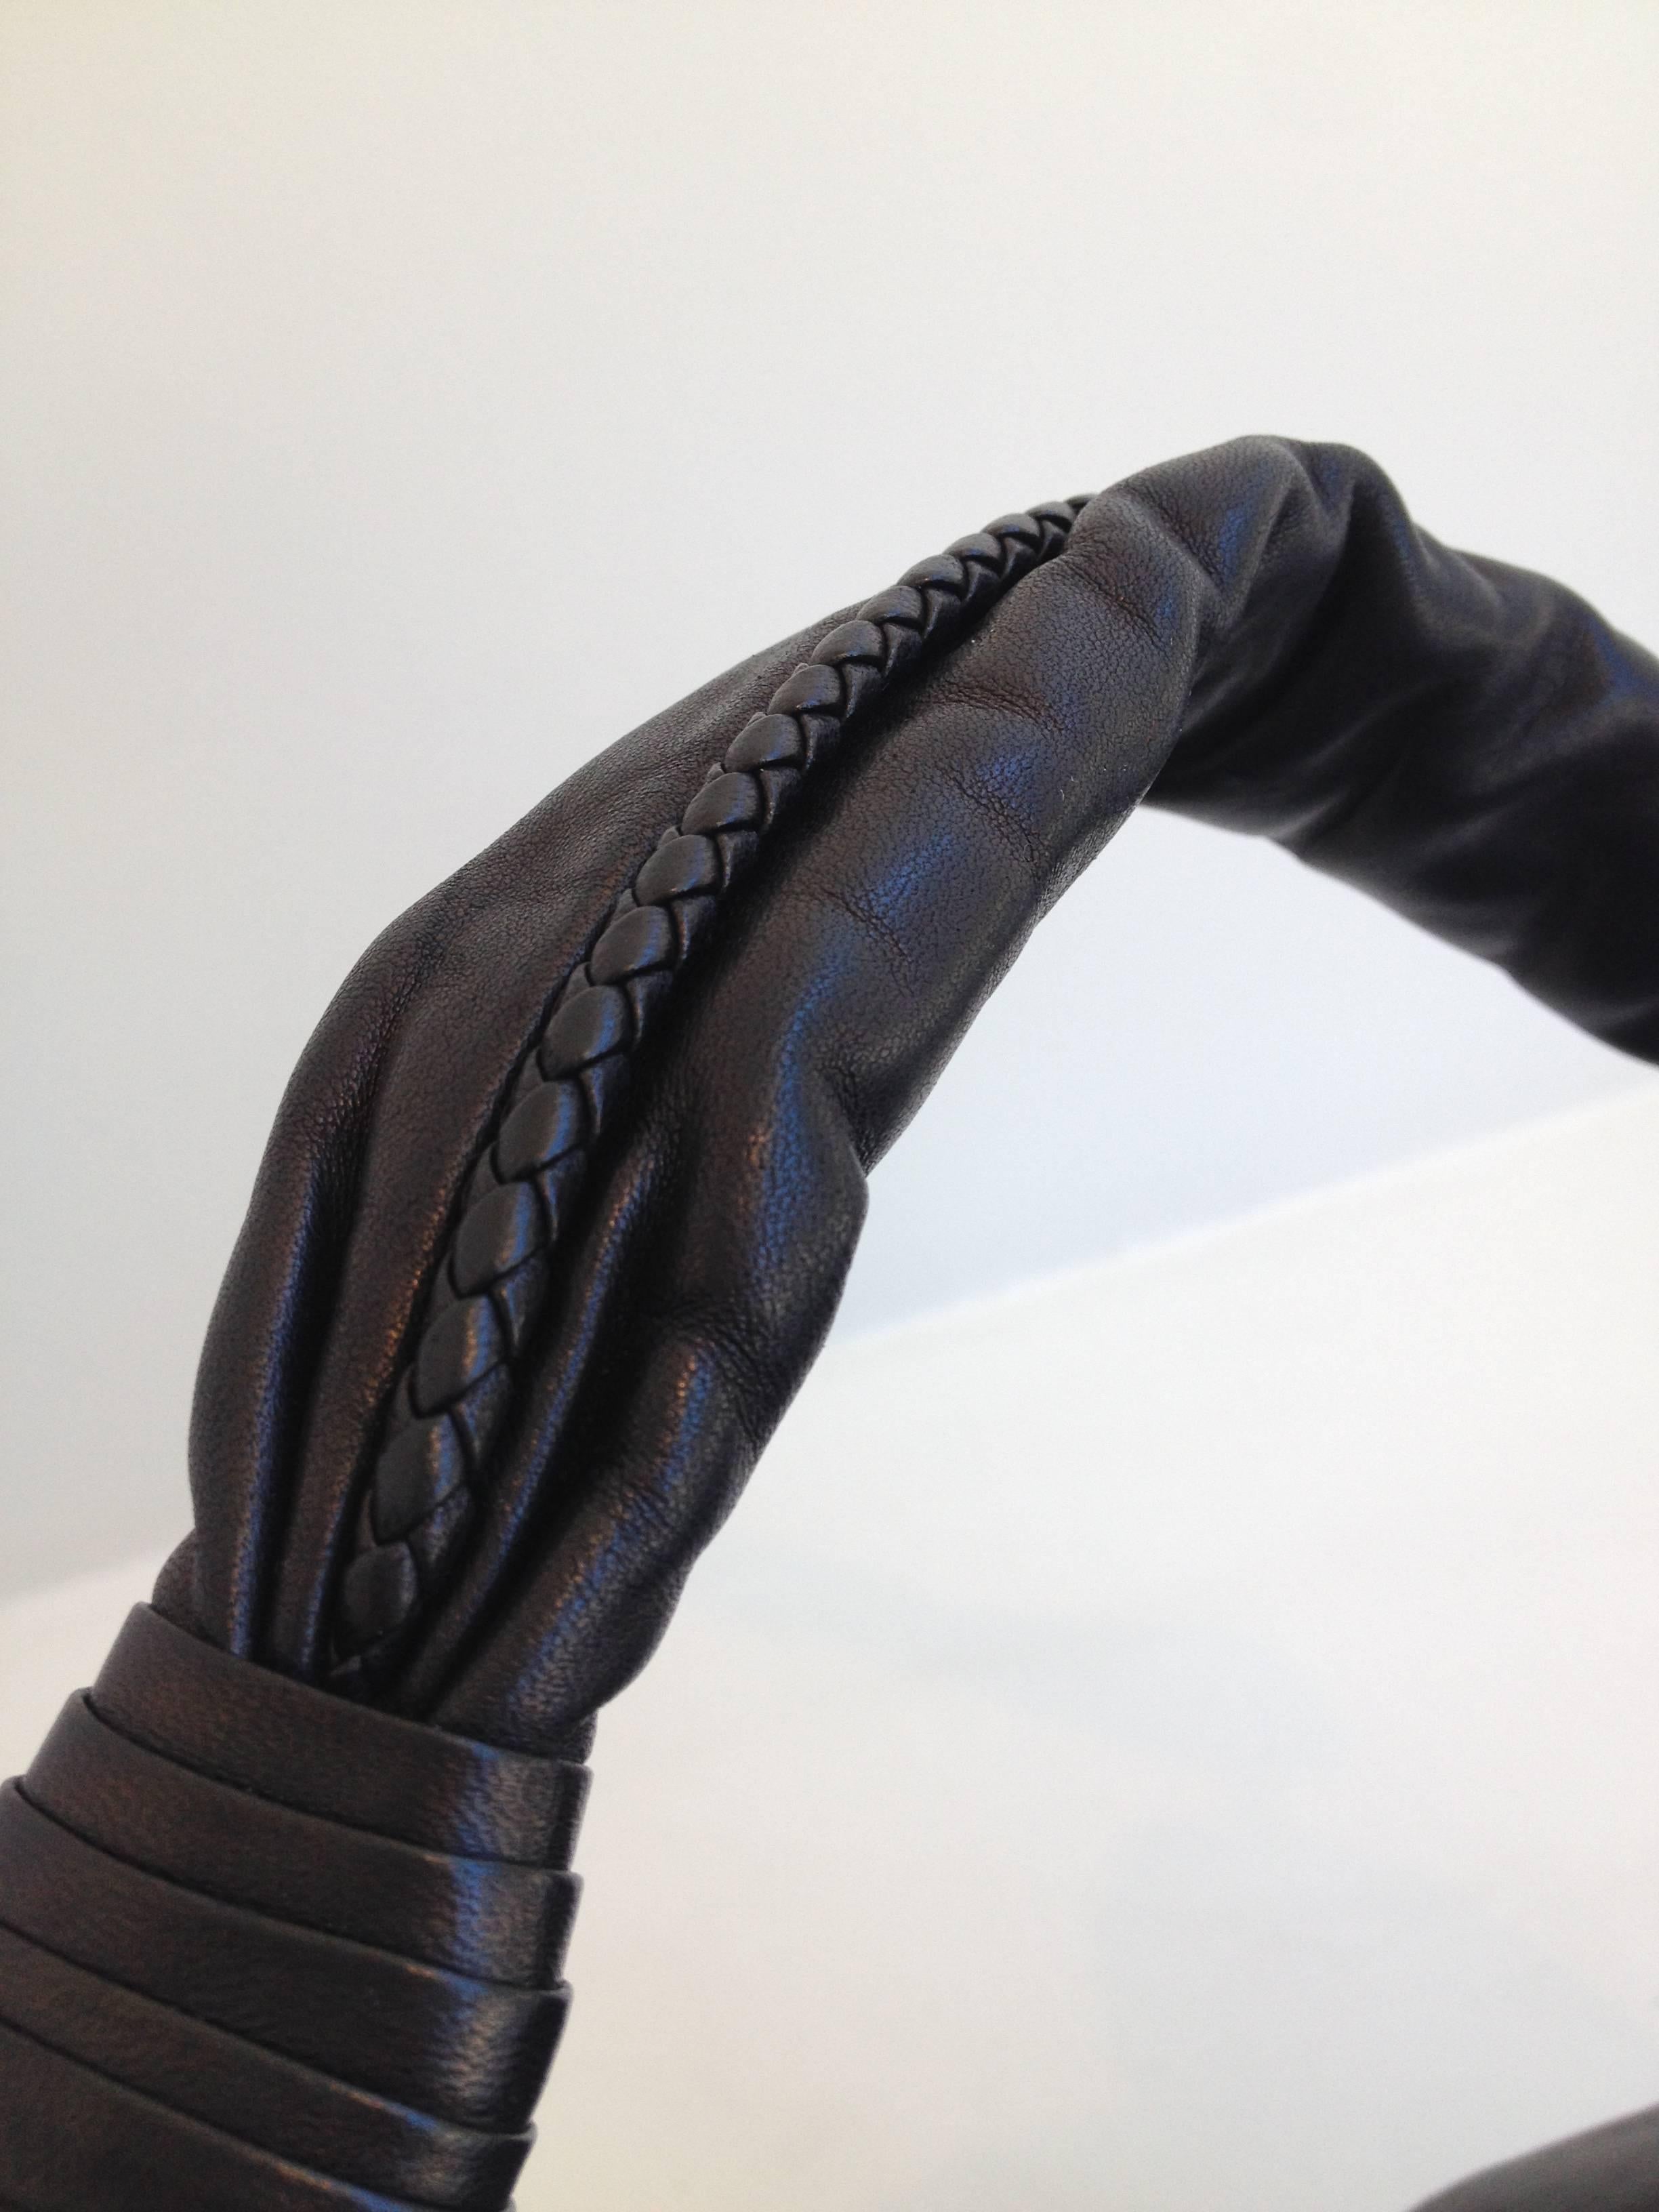 Bottega Veneta Black Leather Hobo Bag With Intracciato Details 1